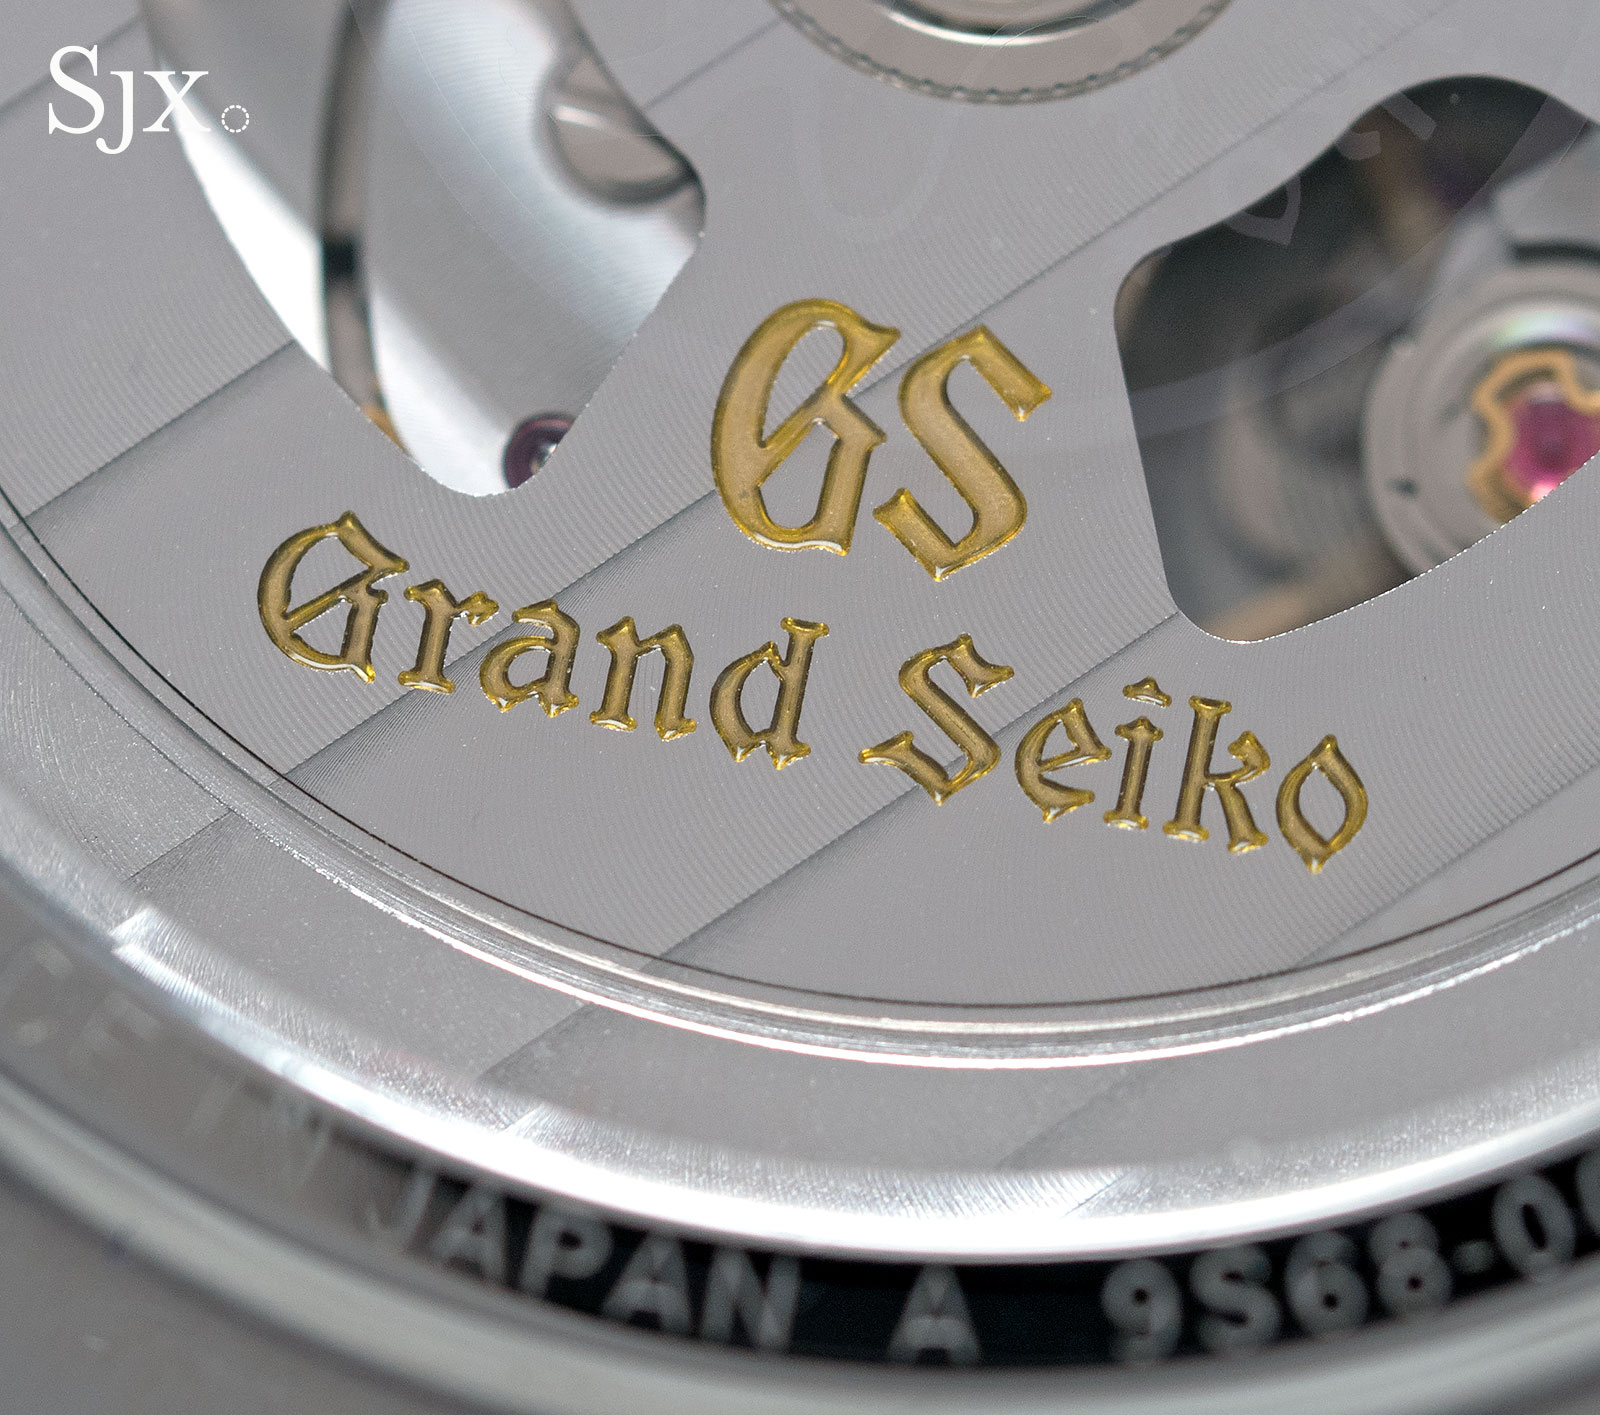 Grand Seiko SBGR305 titanium 11